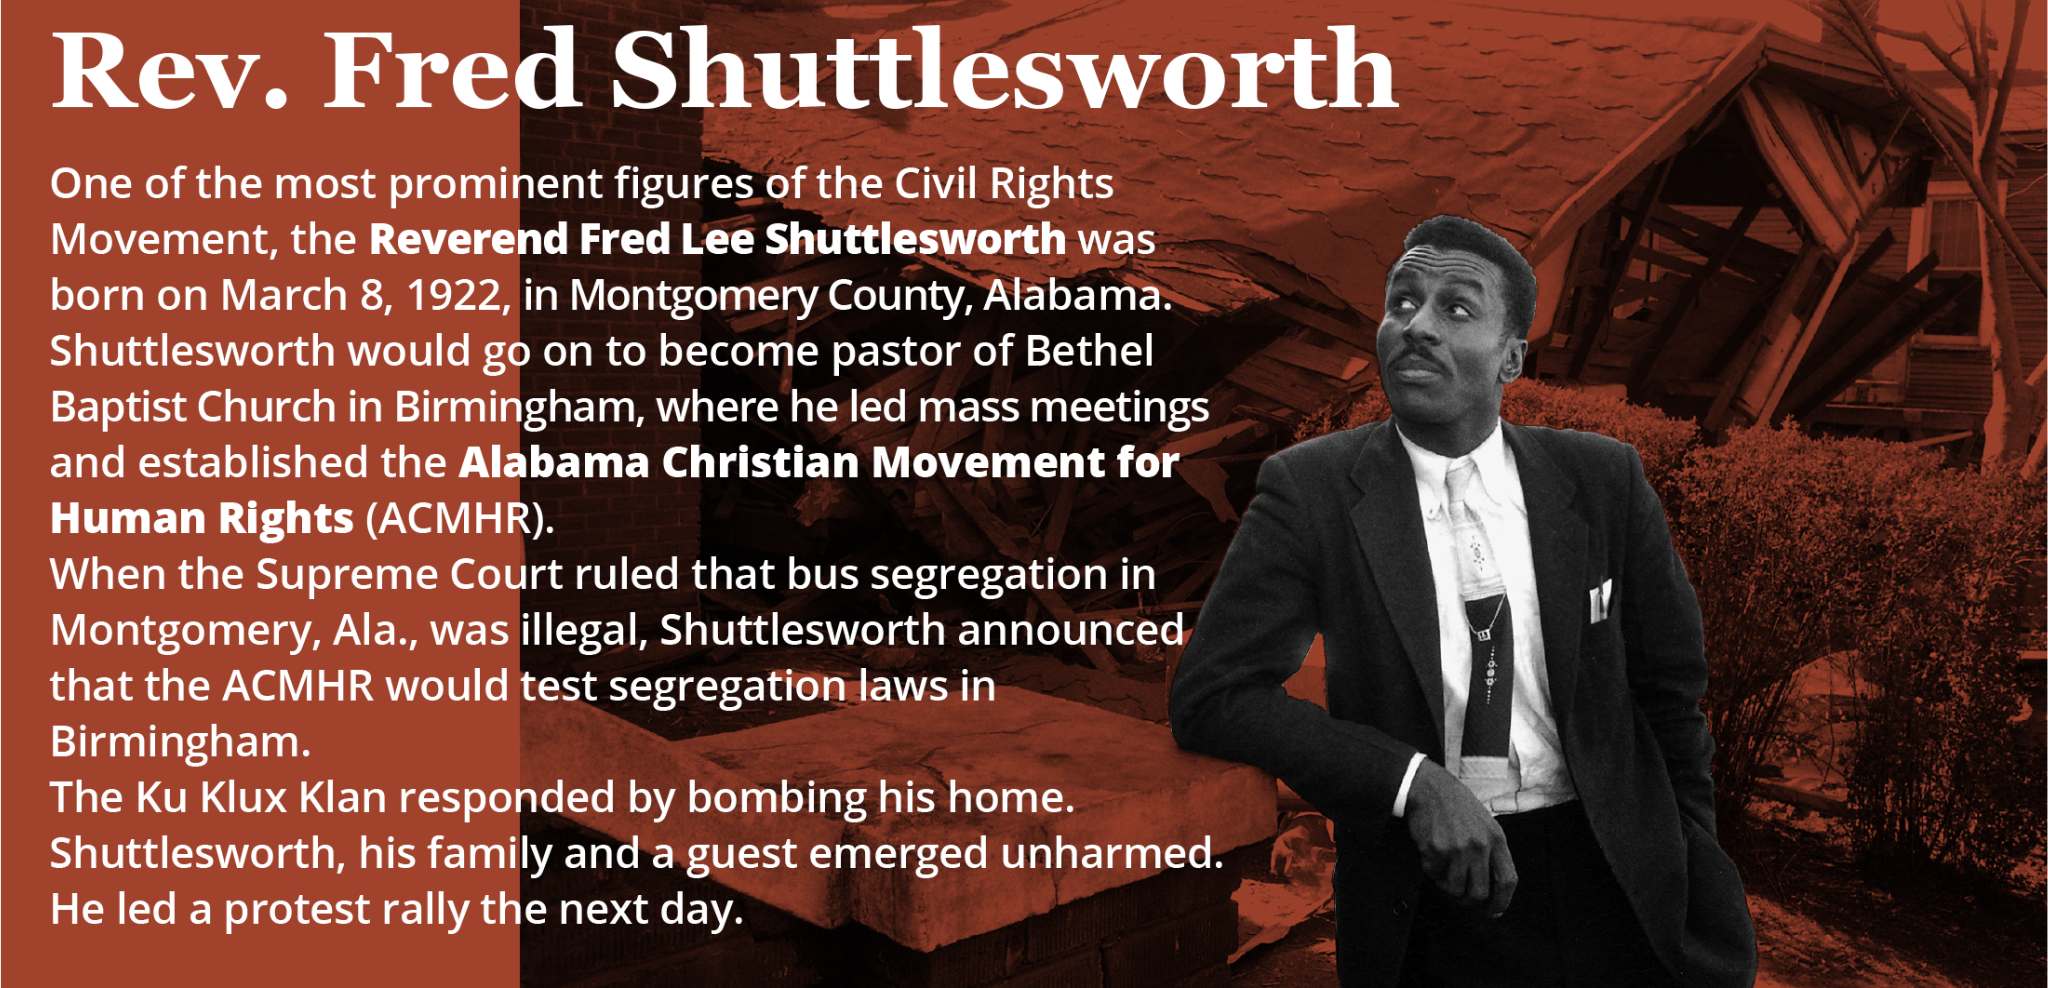 Rev. Fred Shuttlesworth